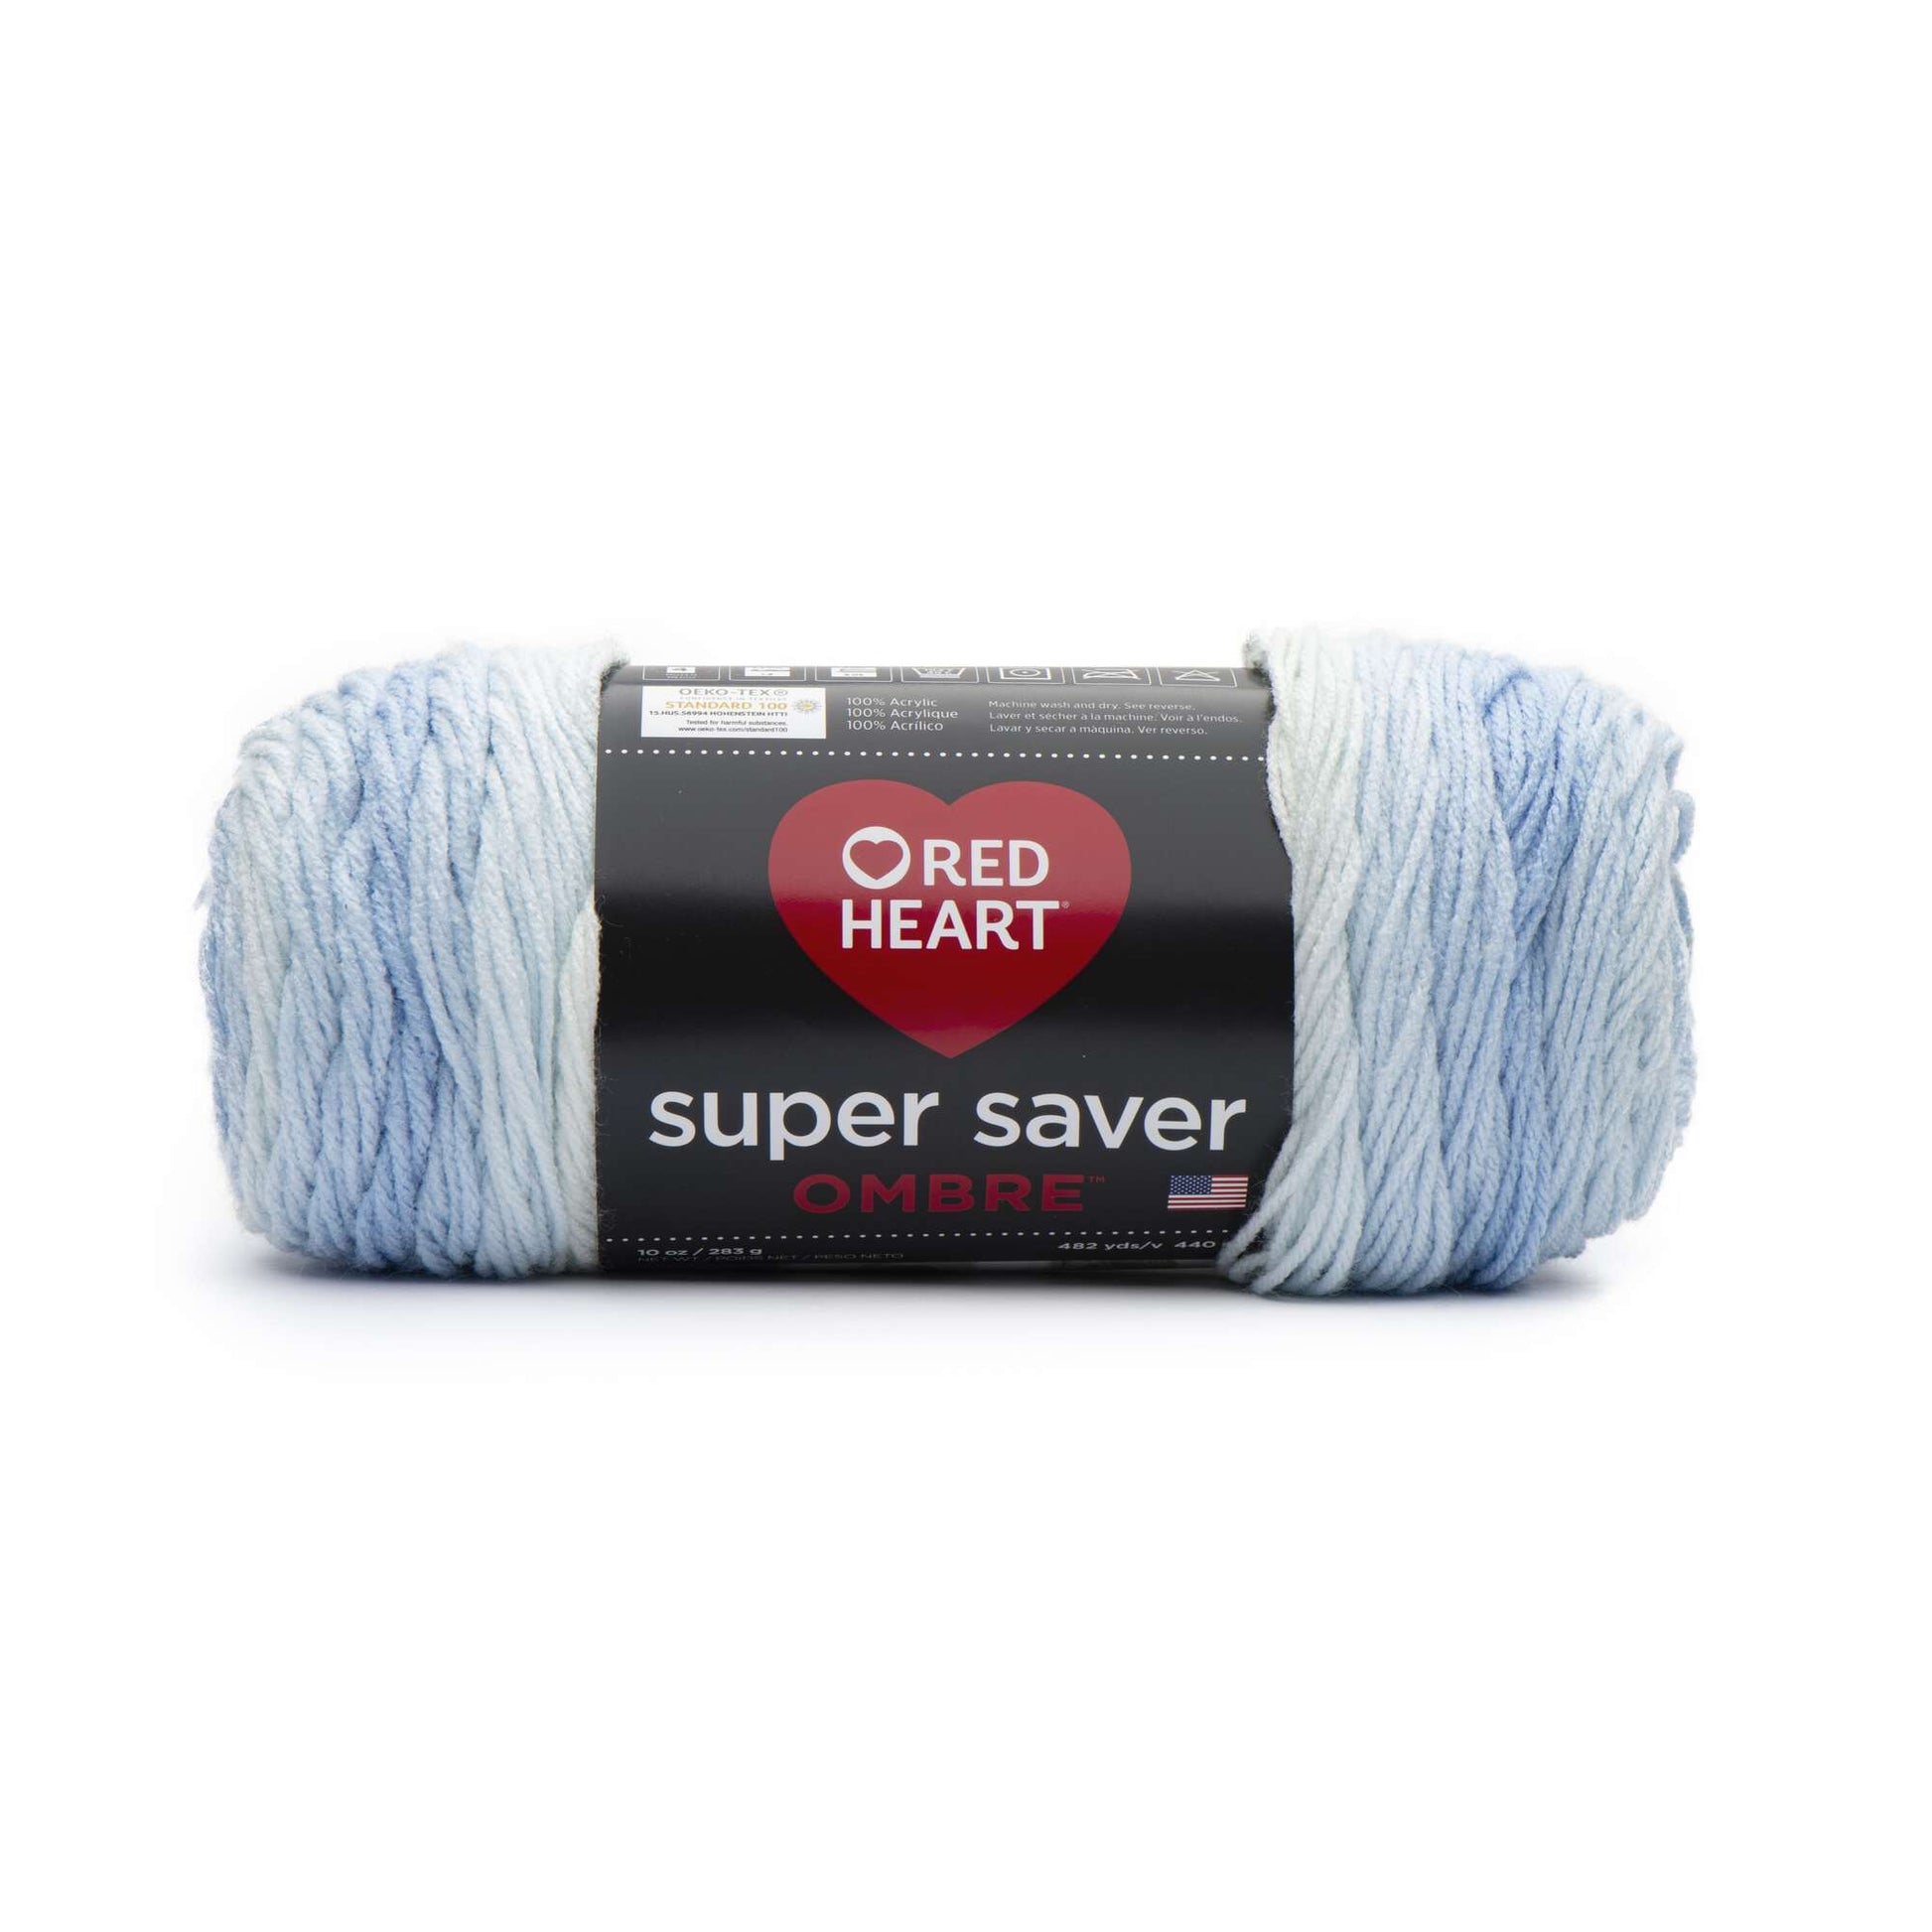 Red Heart Super Saver Jumbo True Blue Ombre Yarn - 2 Pack of 283g/10oz -  Acrylic - 4 Medium (Worsted) - 482 Yards - Knitting/Crochet